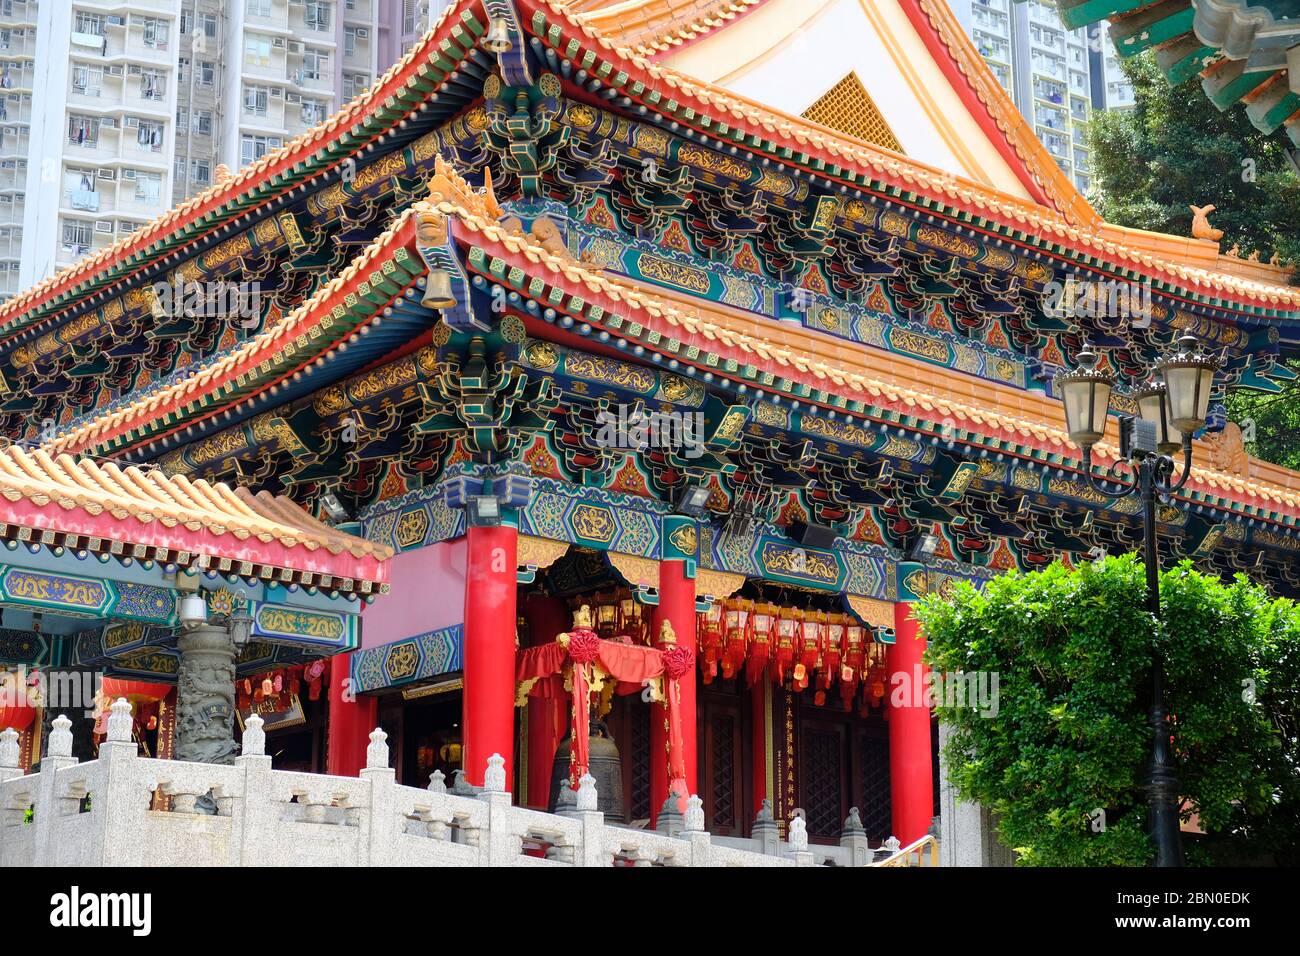 Hong Kong China - Sik Sik Yuen Wong Tai sin Templo, tres religiones Templo del Budismo, Taoísmo y Confucianismo Foto de stock